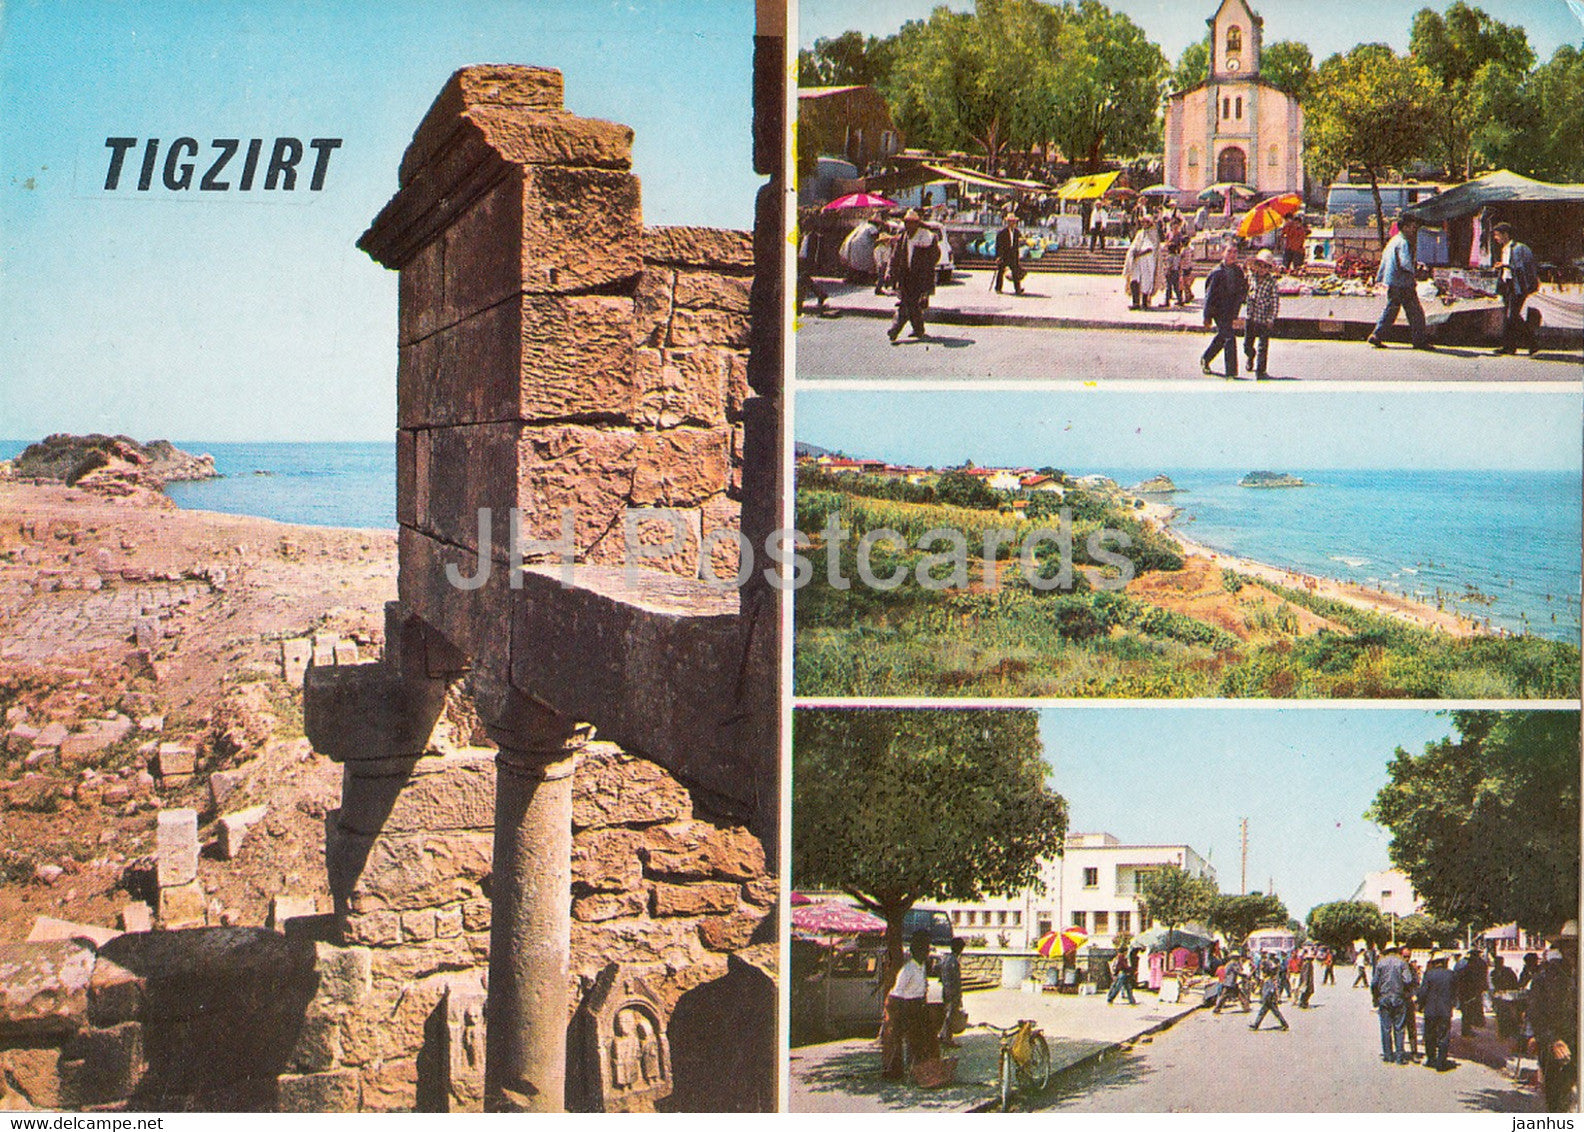 Tigzirt - ruins - strteet view - multiview - Algeria - used - JH Postcards